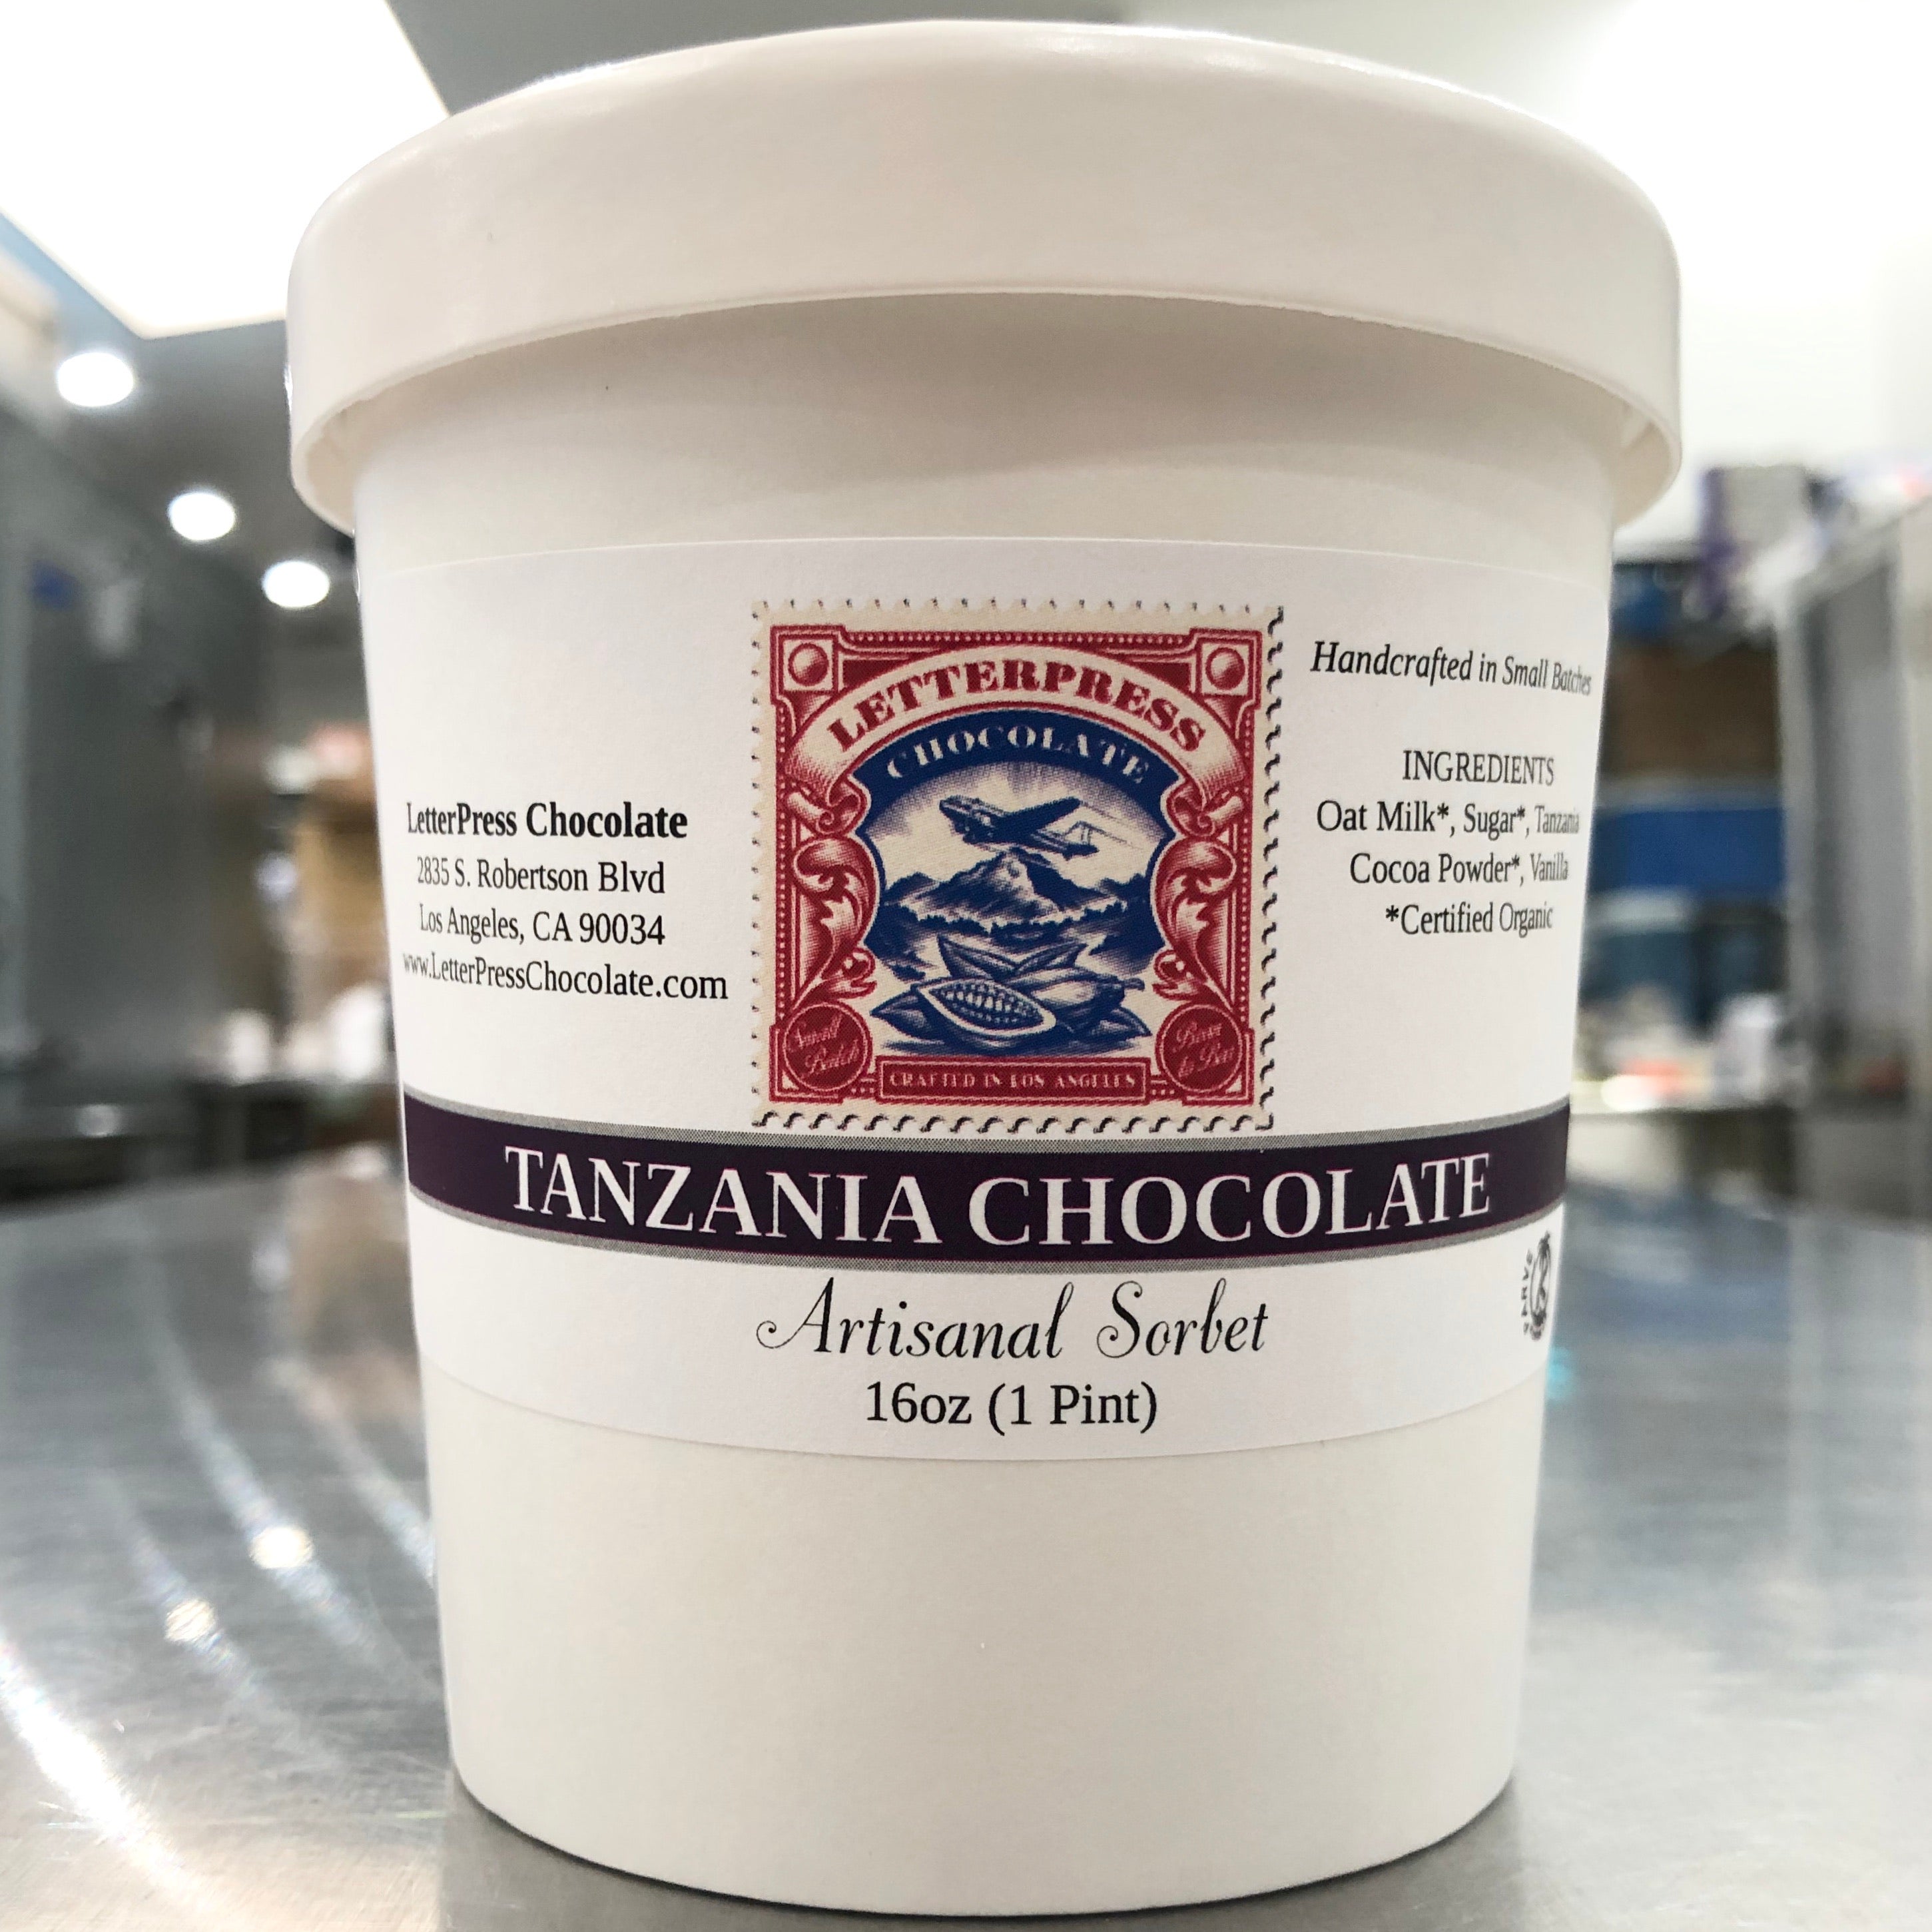 Pint of Tanzania Chocolate Ice Cream